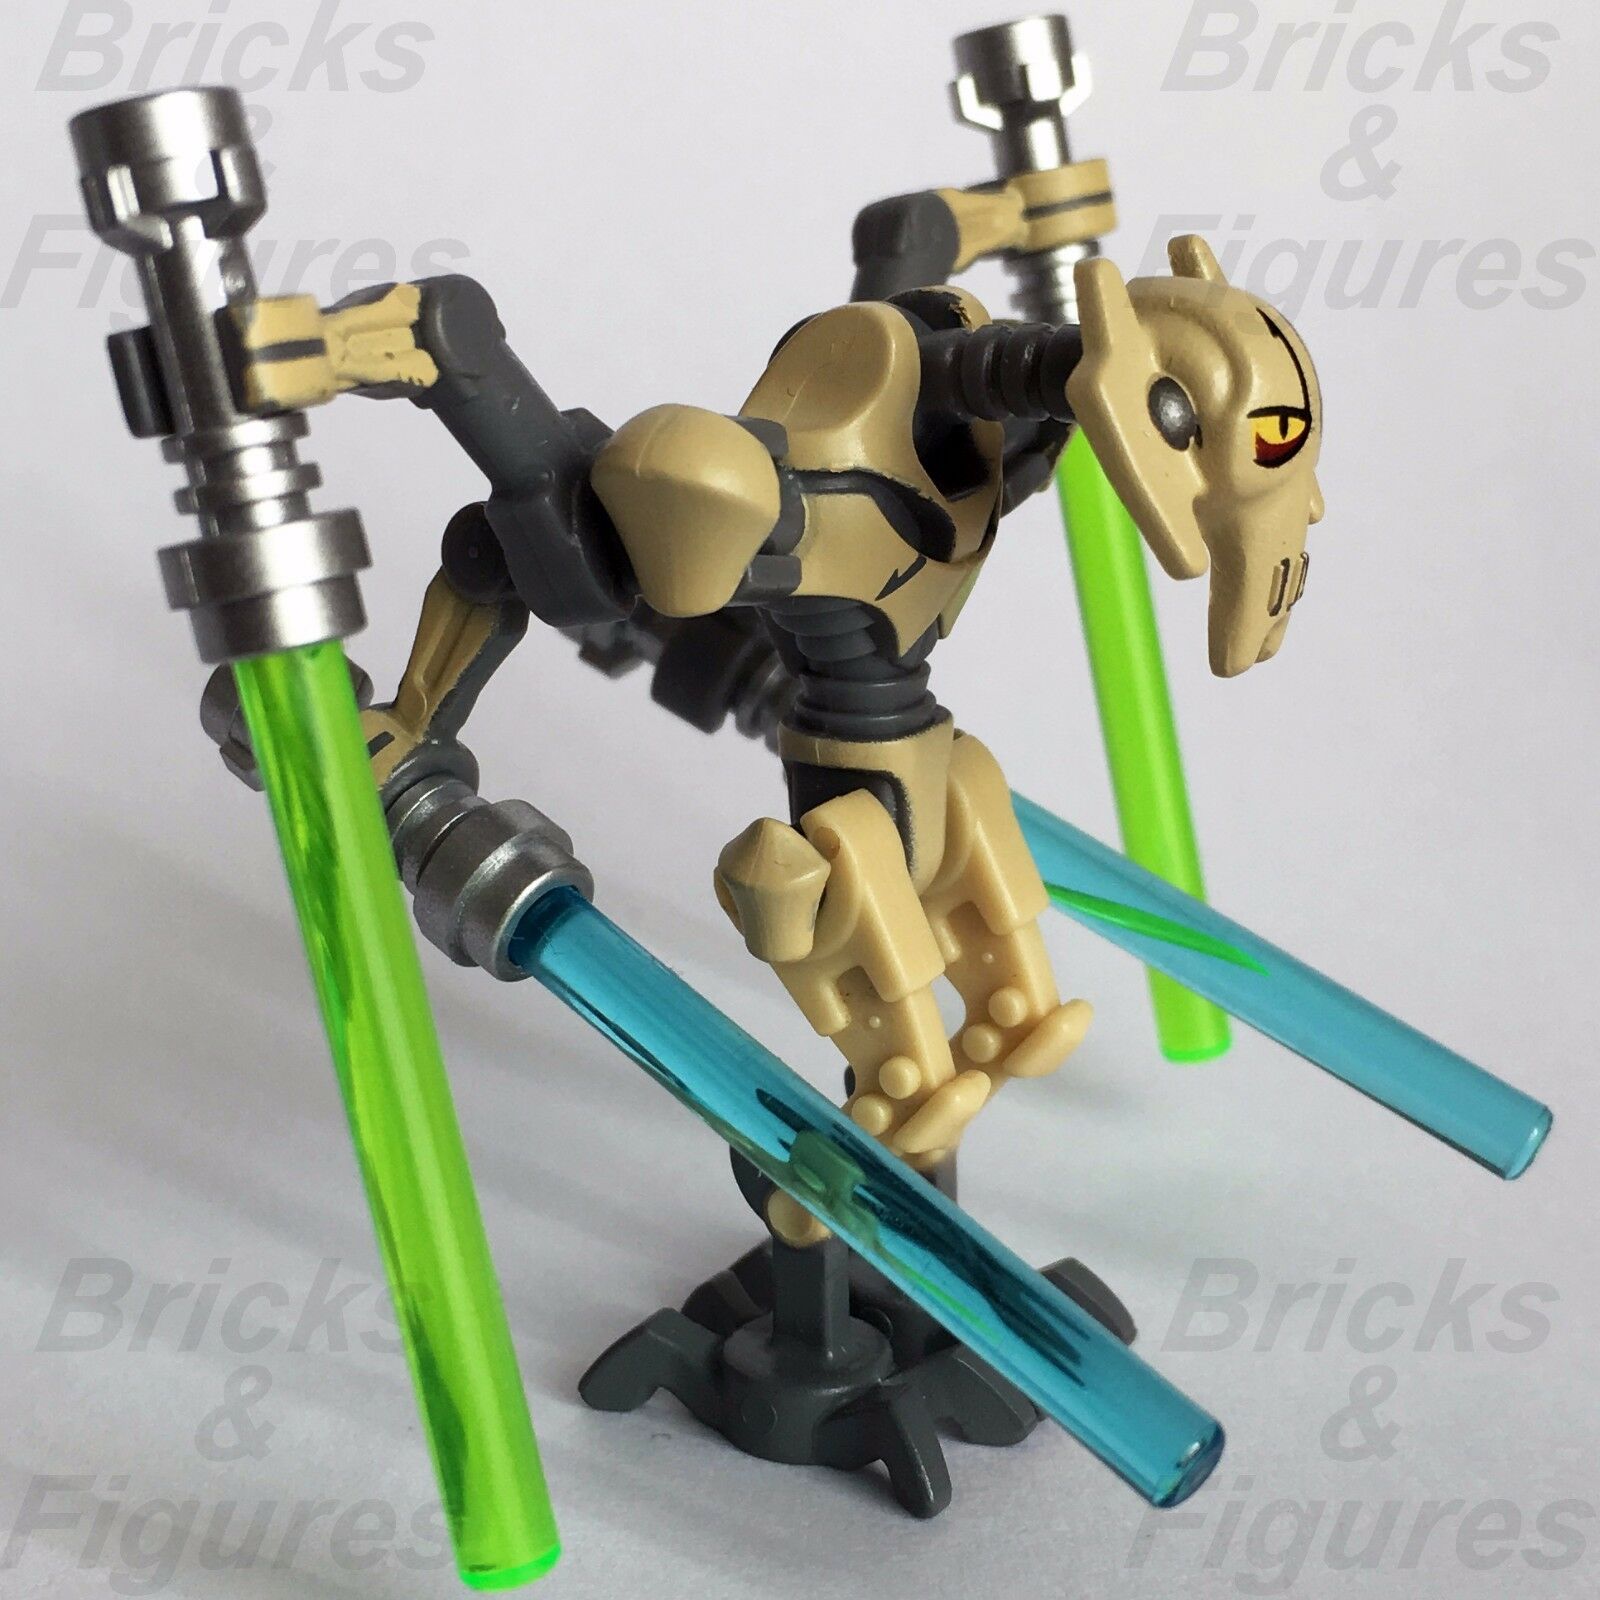 New Star Wars LEGO General Grievous Cyborg Separatist Minifigure 8095 9515 - Bricks & Figures